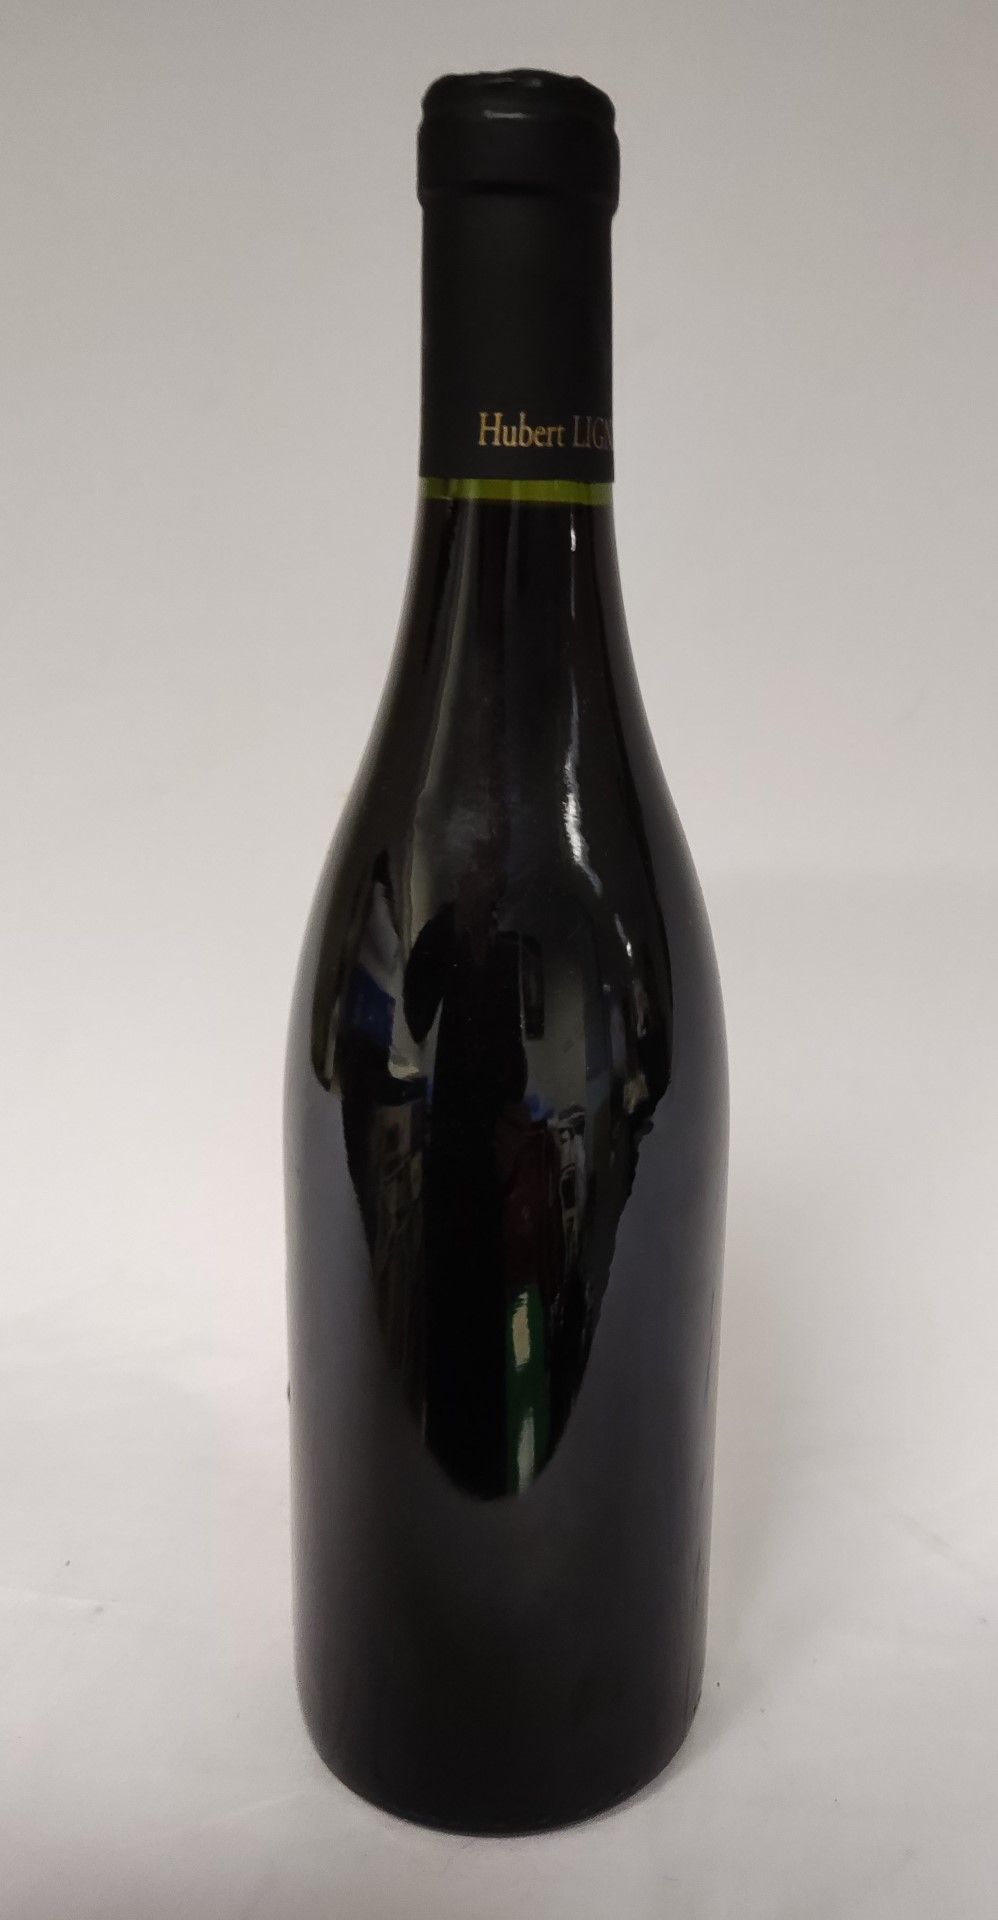 1 x Bottle of 2017 Domaine Hubert Lignier Morey-Saint-Denis Tres Girard Red Wine - RRP £60 - Image 2 of 4